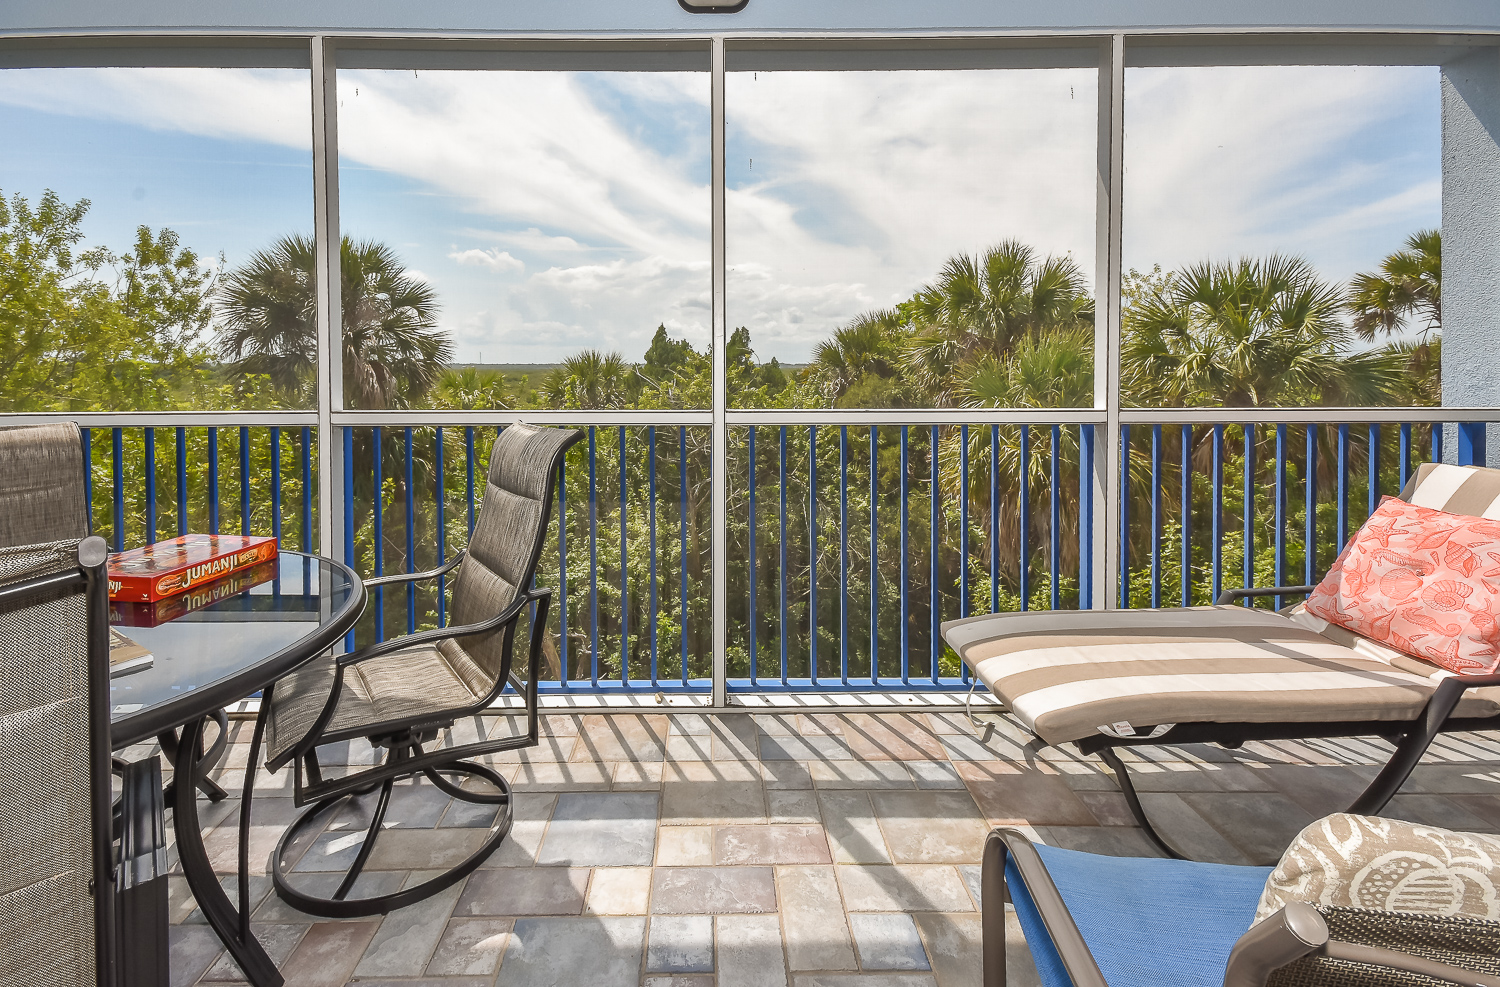 Balcony view from this vacation rental near New Smyrna Beach FL